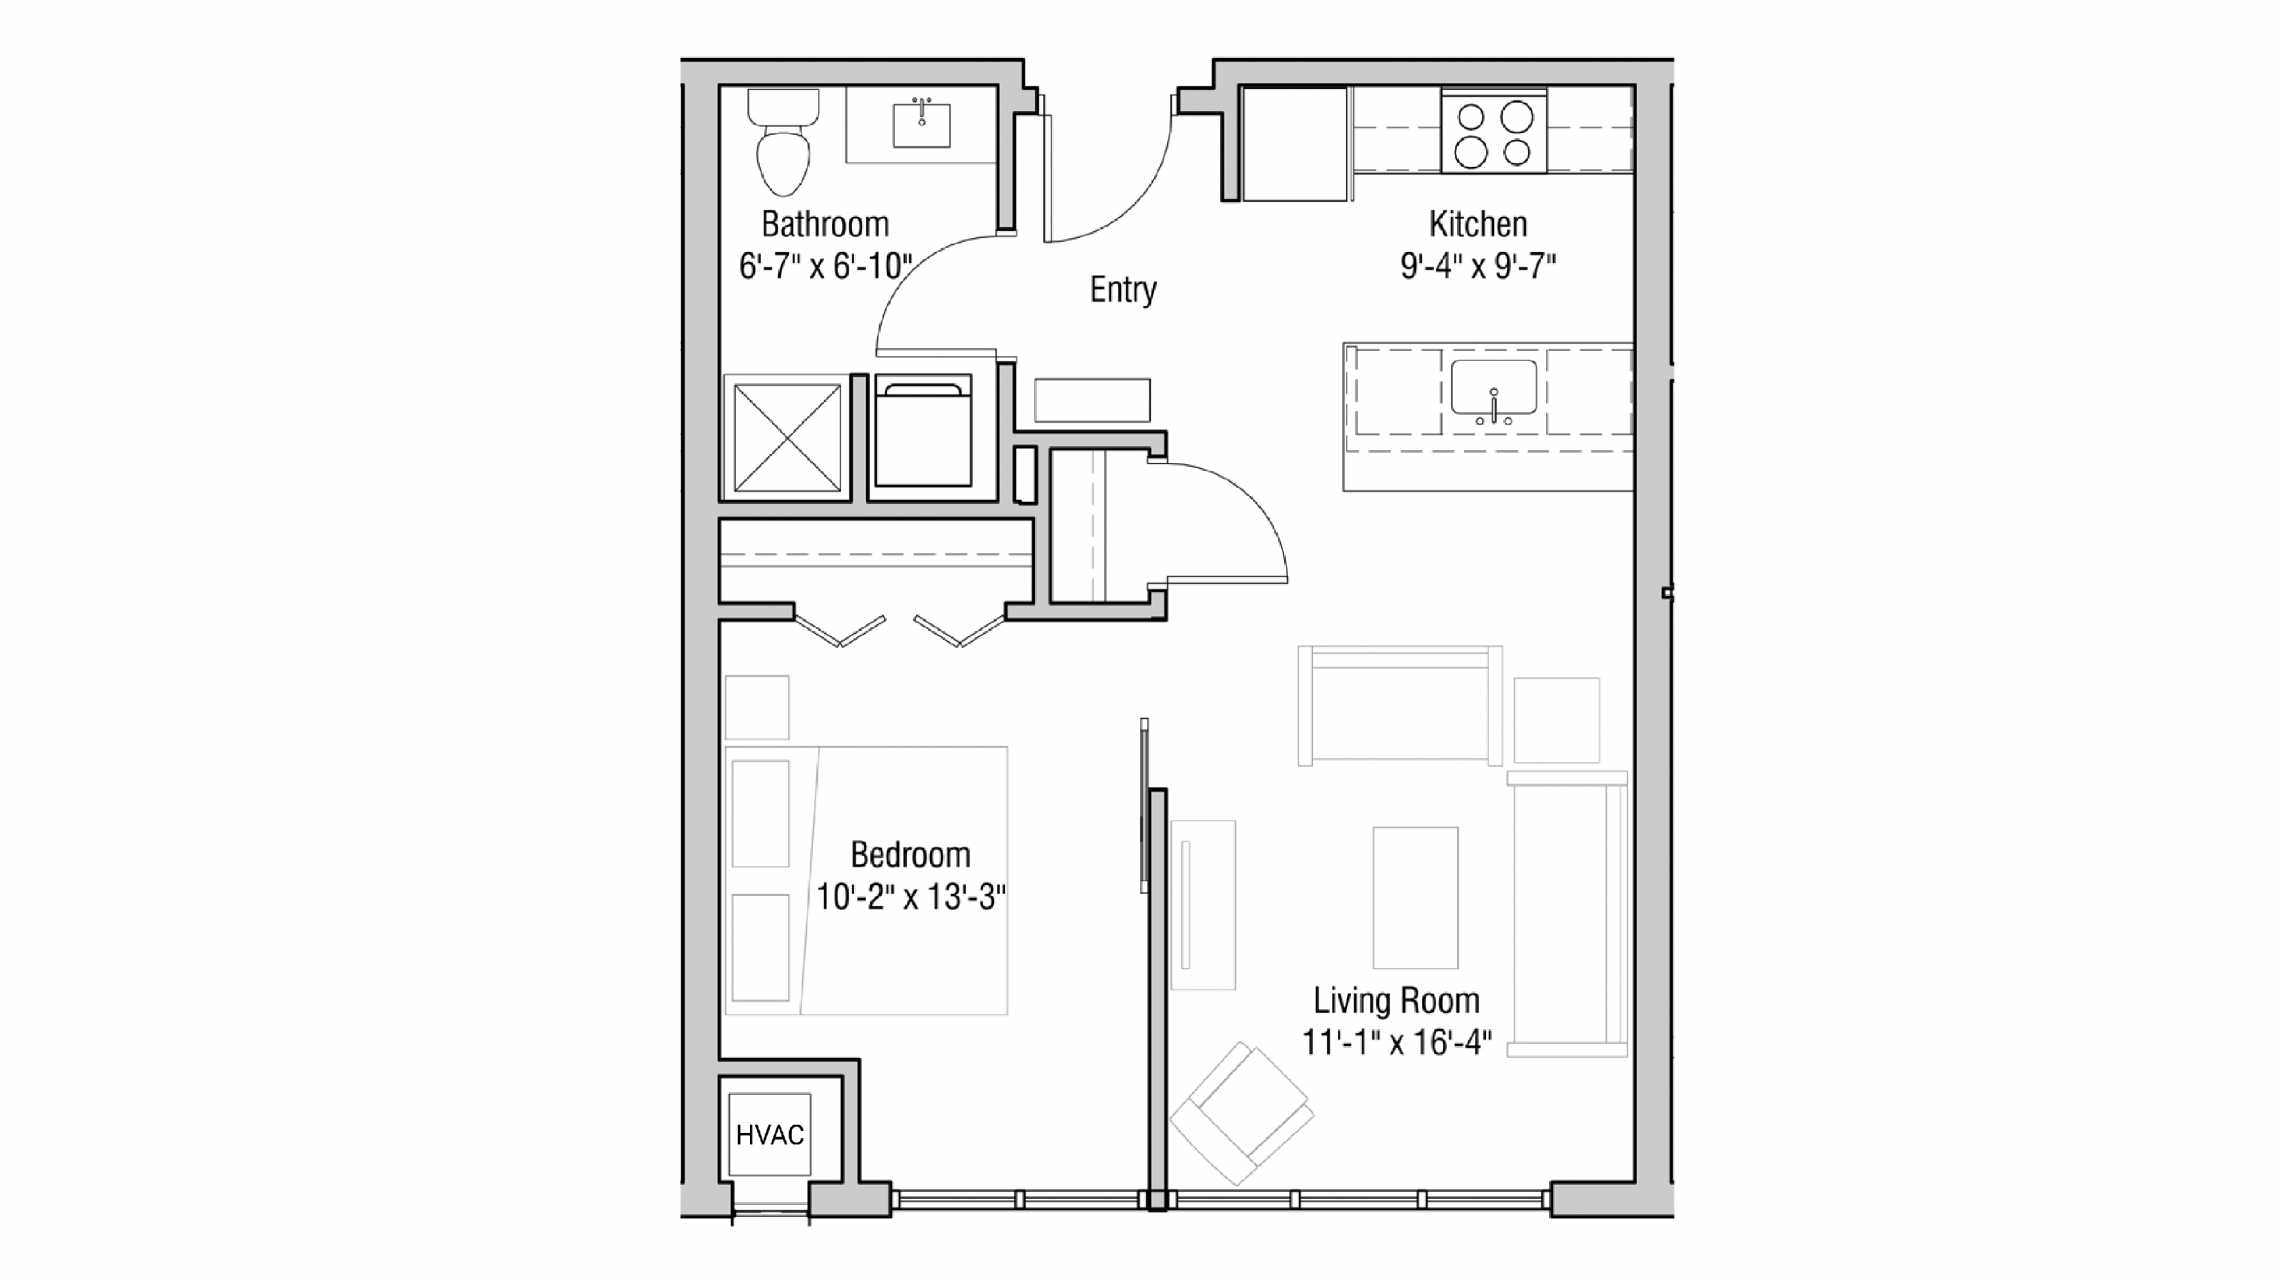 ULI Quarter Row 322 - One Bedroom, One Bathroom